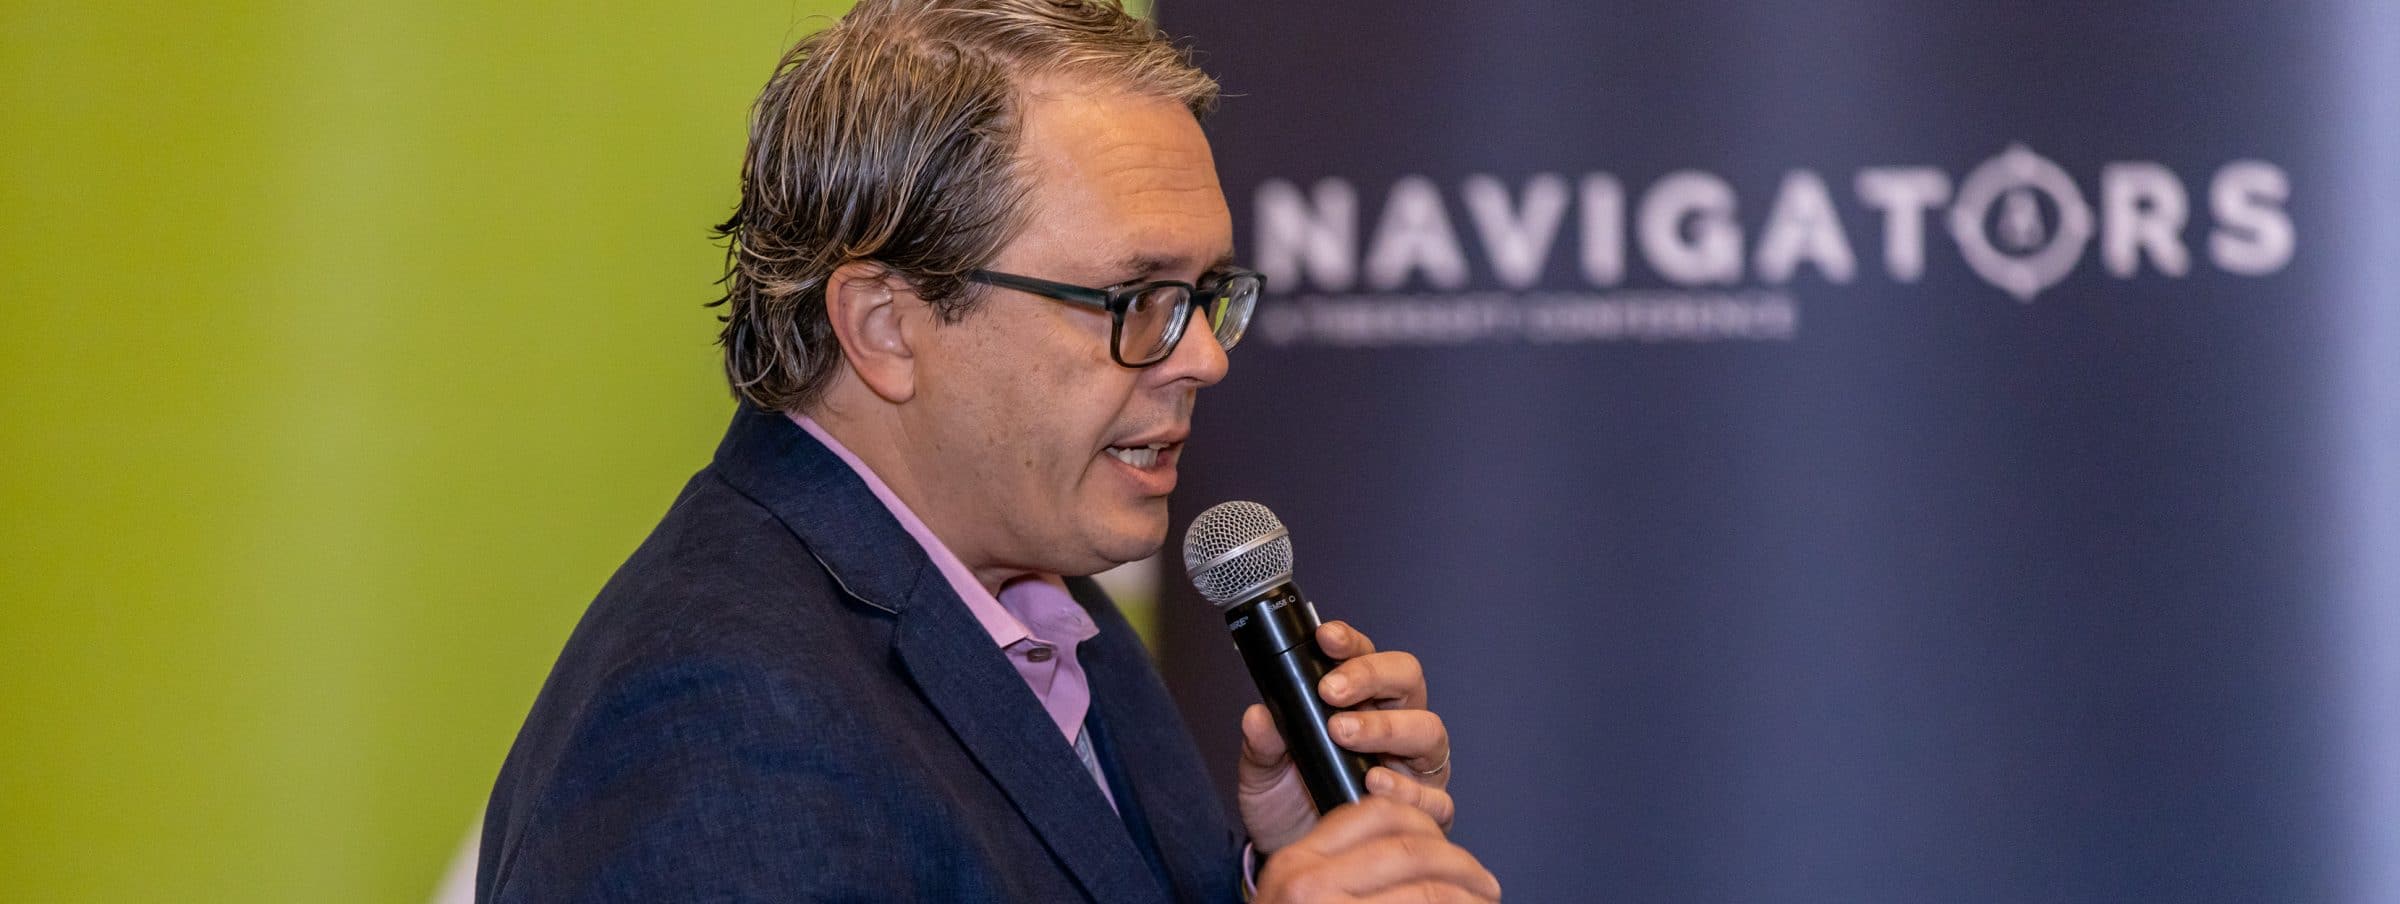 Chris Hart speaking at Navigators Conference